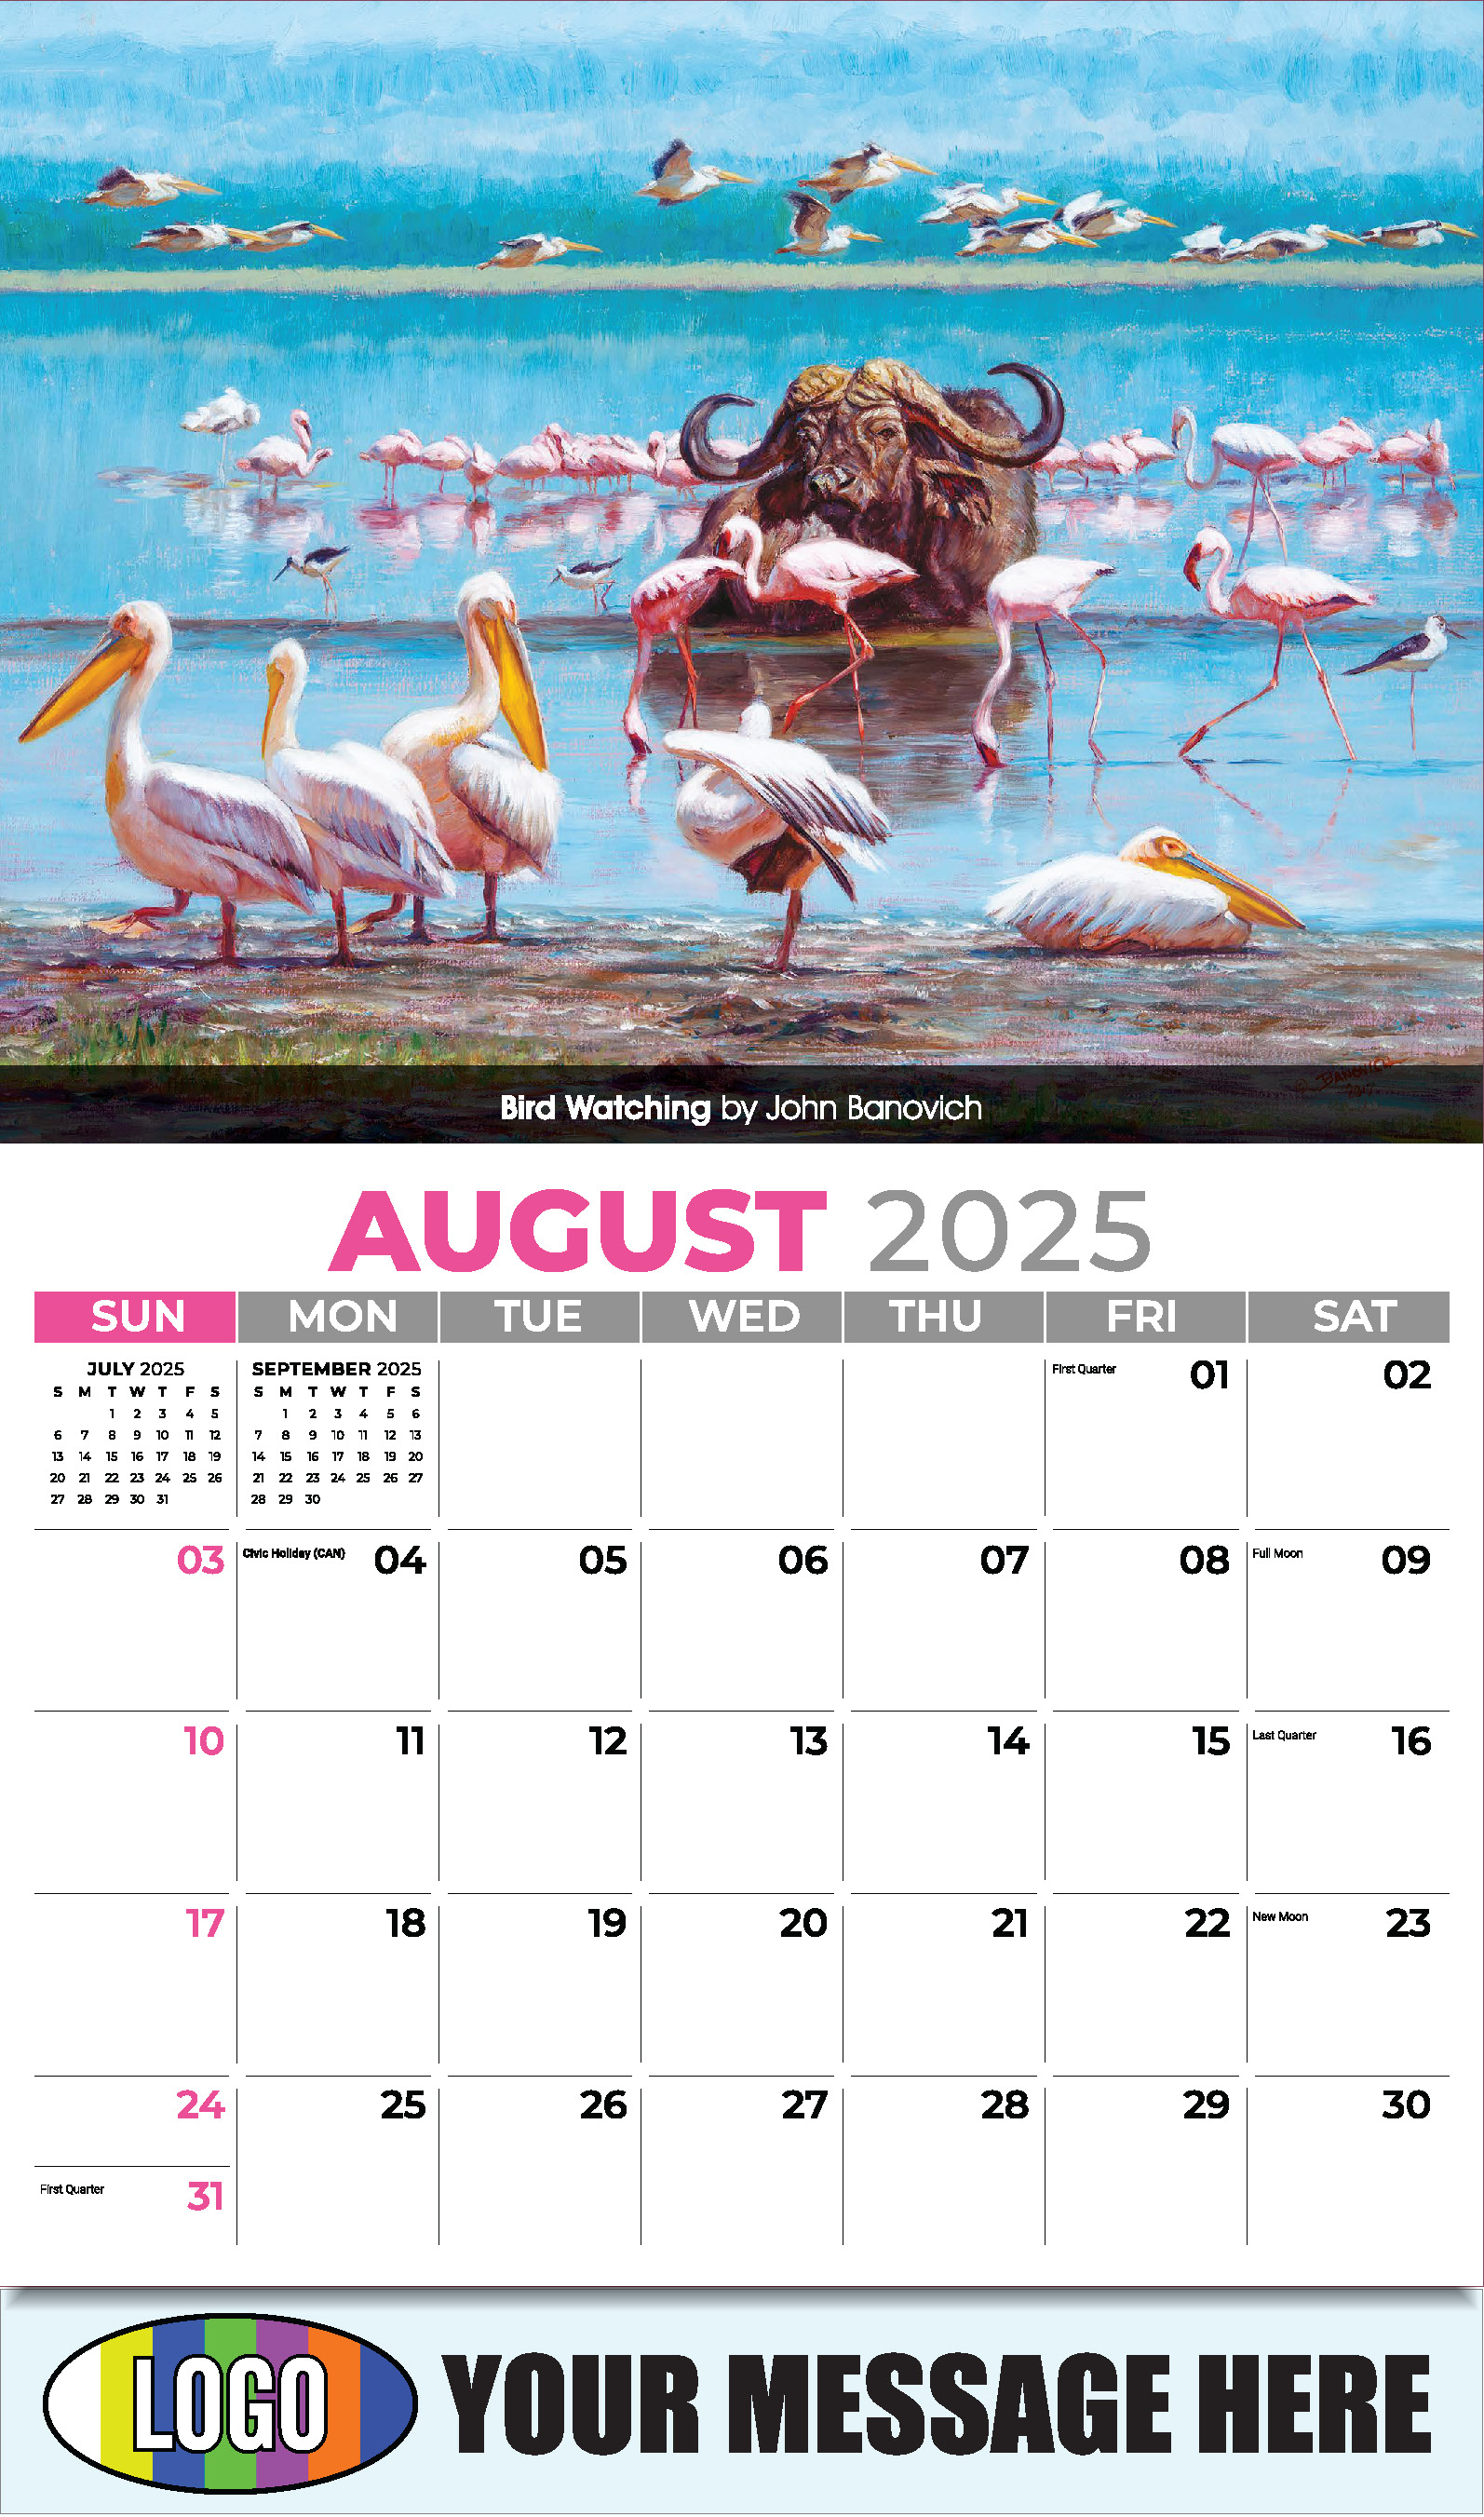 Wildlife Art Portraits 2025 Business Promotion Wall Calendar - August